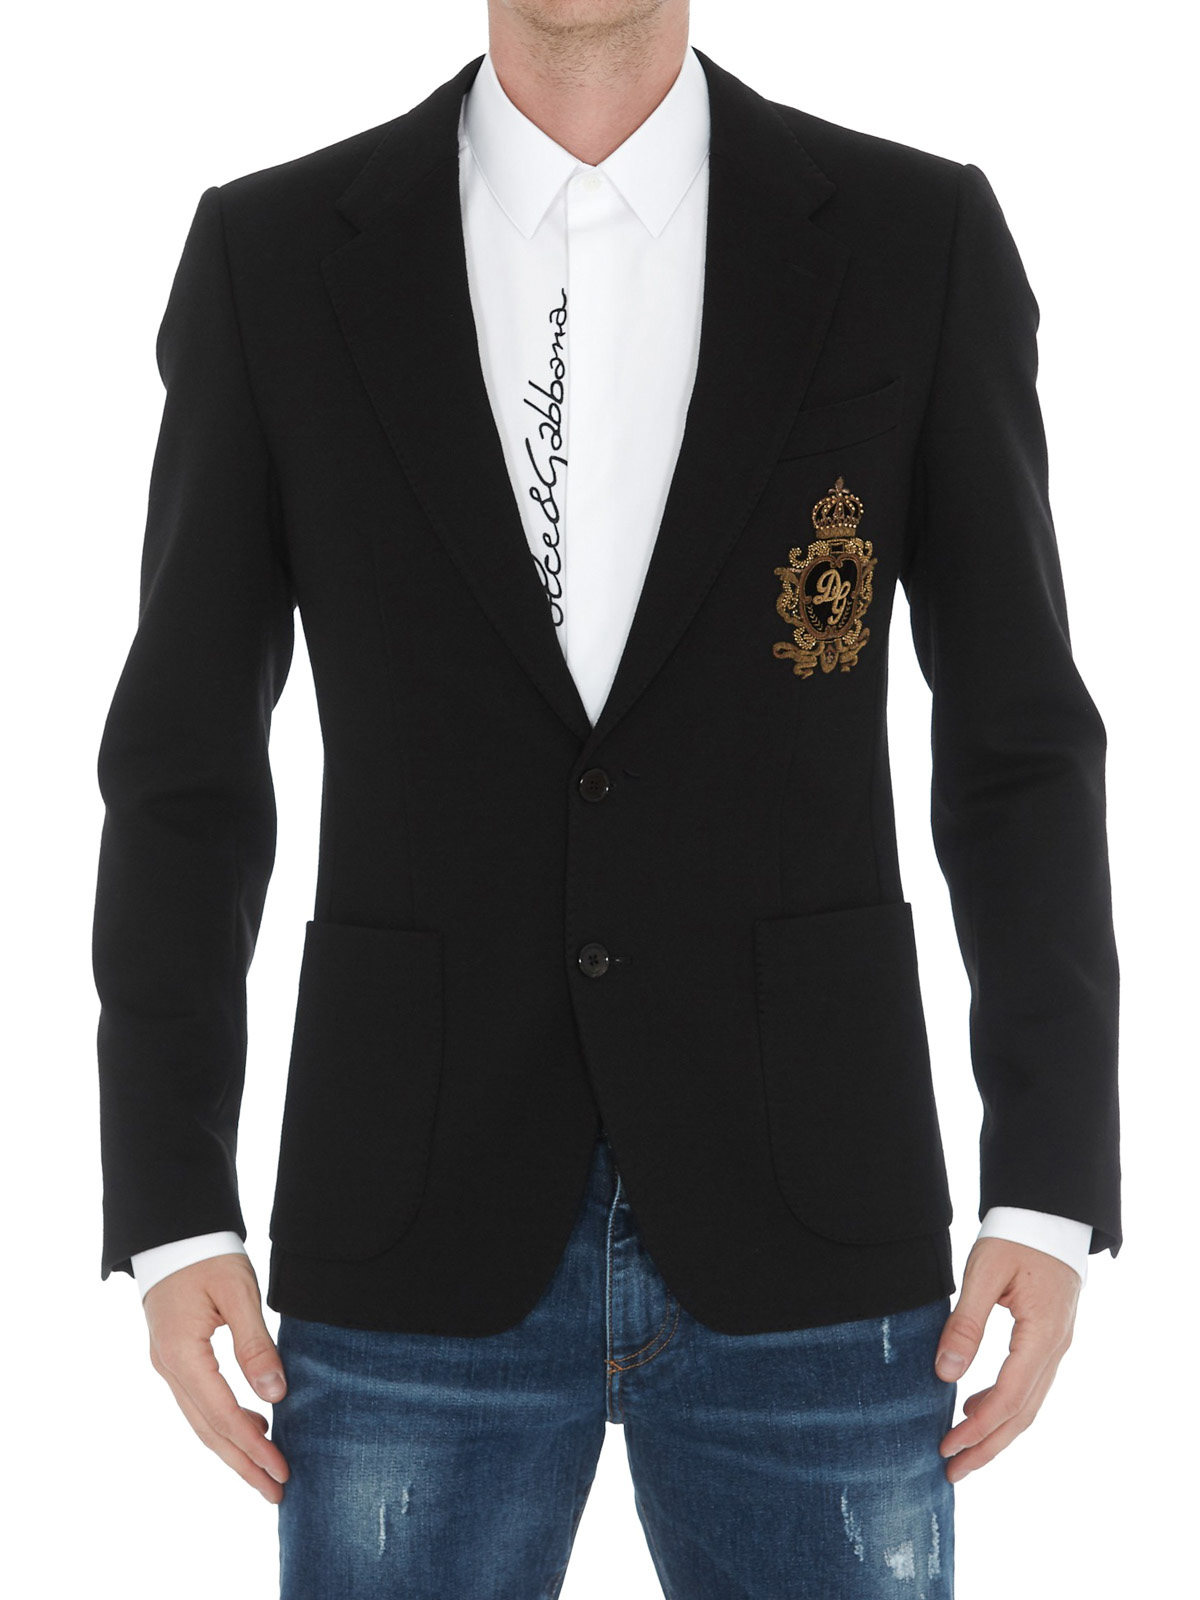 Ale patroon Stralend Blazers Dolce & Gabbana - Wool blend embroidered two-button blazer -  G2NF1ZFUGI6N0000